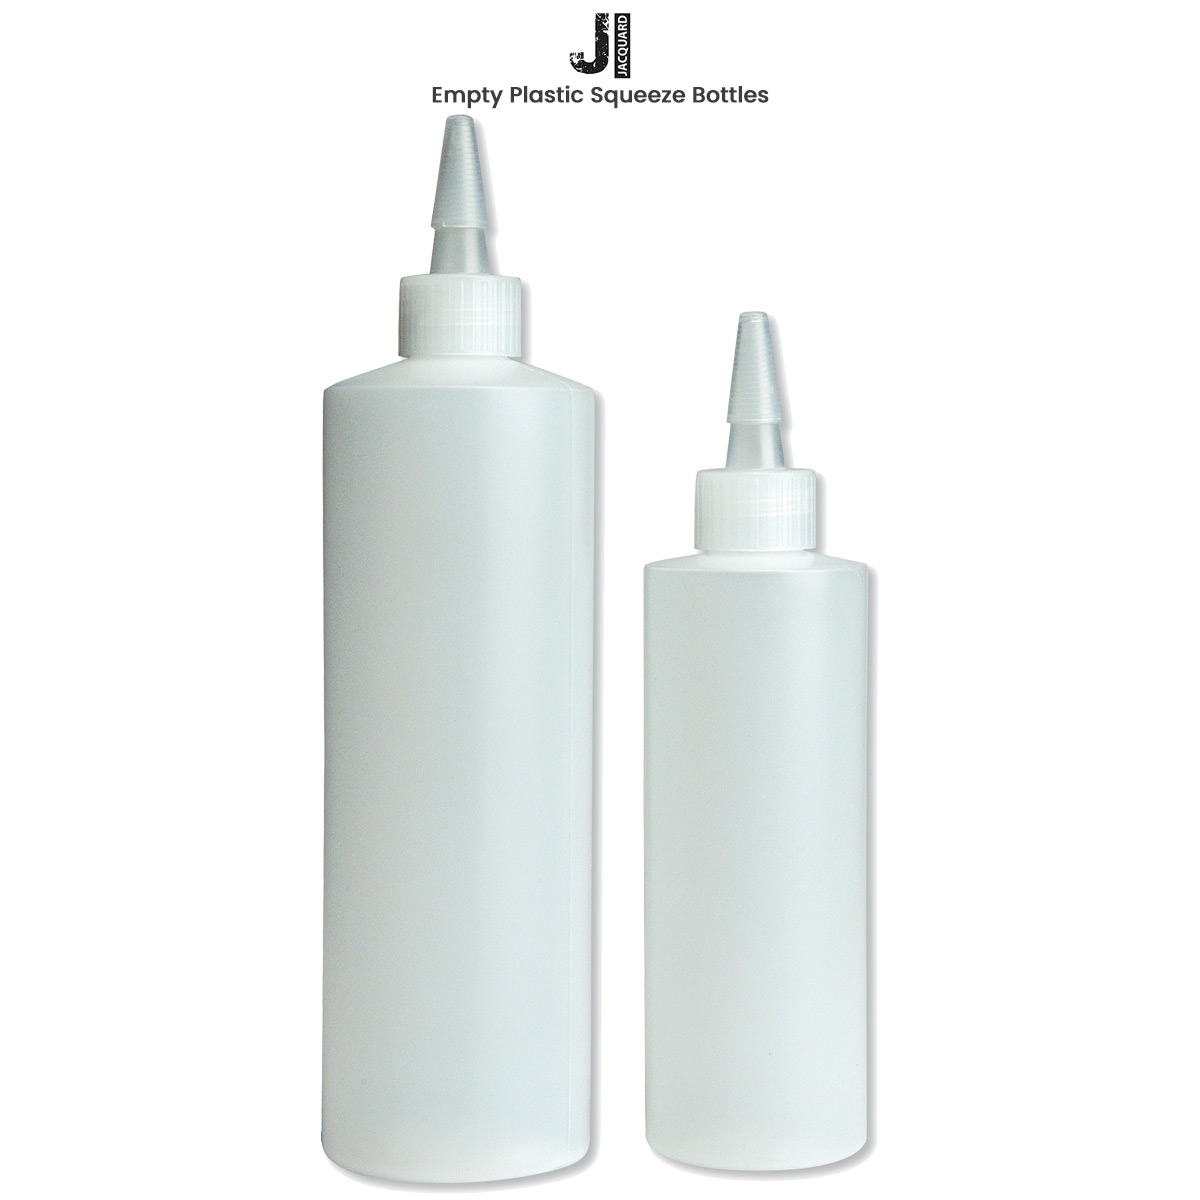 https://www.jerrysartarama.com/media/catalog/product/j/a/jacquard-plastic-squeeze-bottles-new-main.jpg